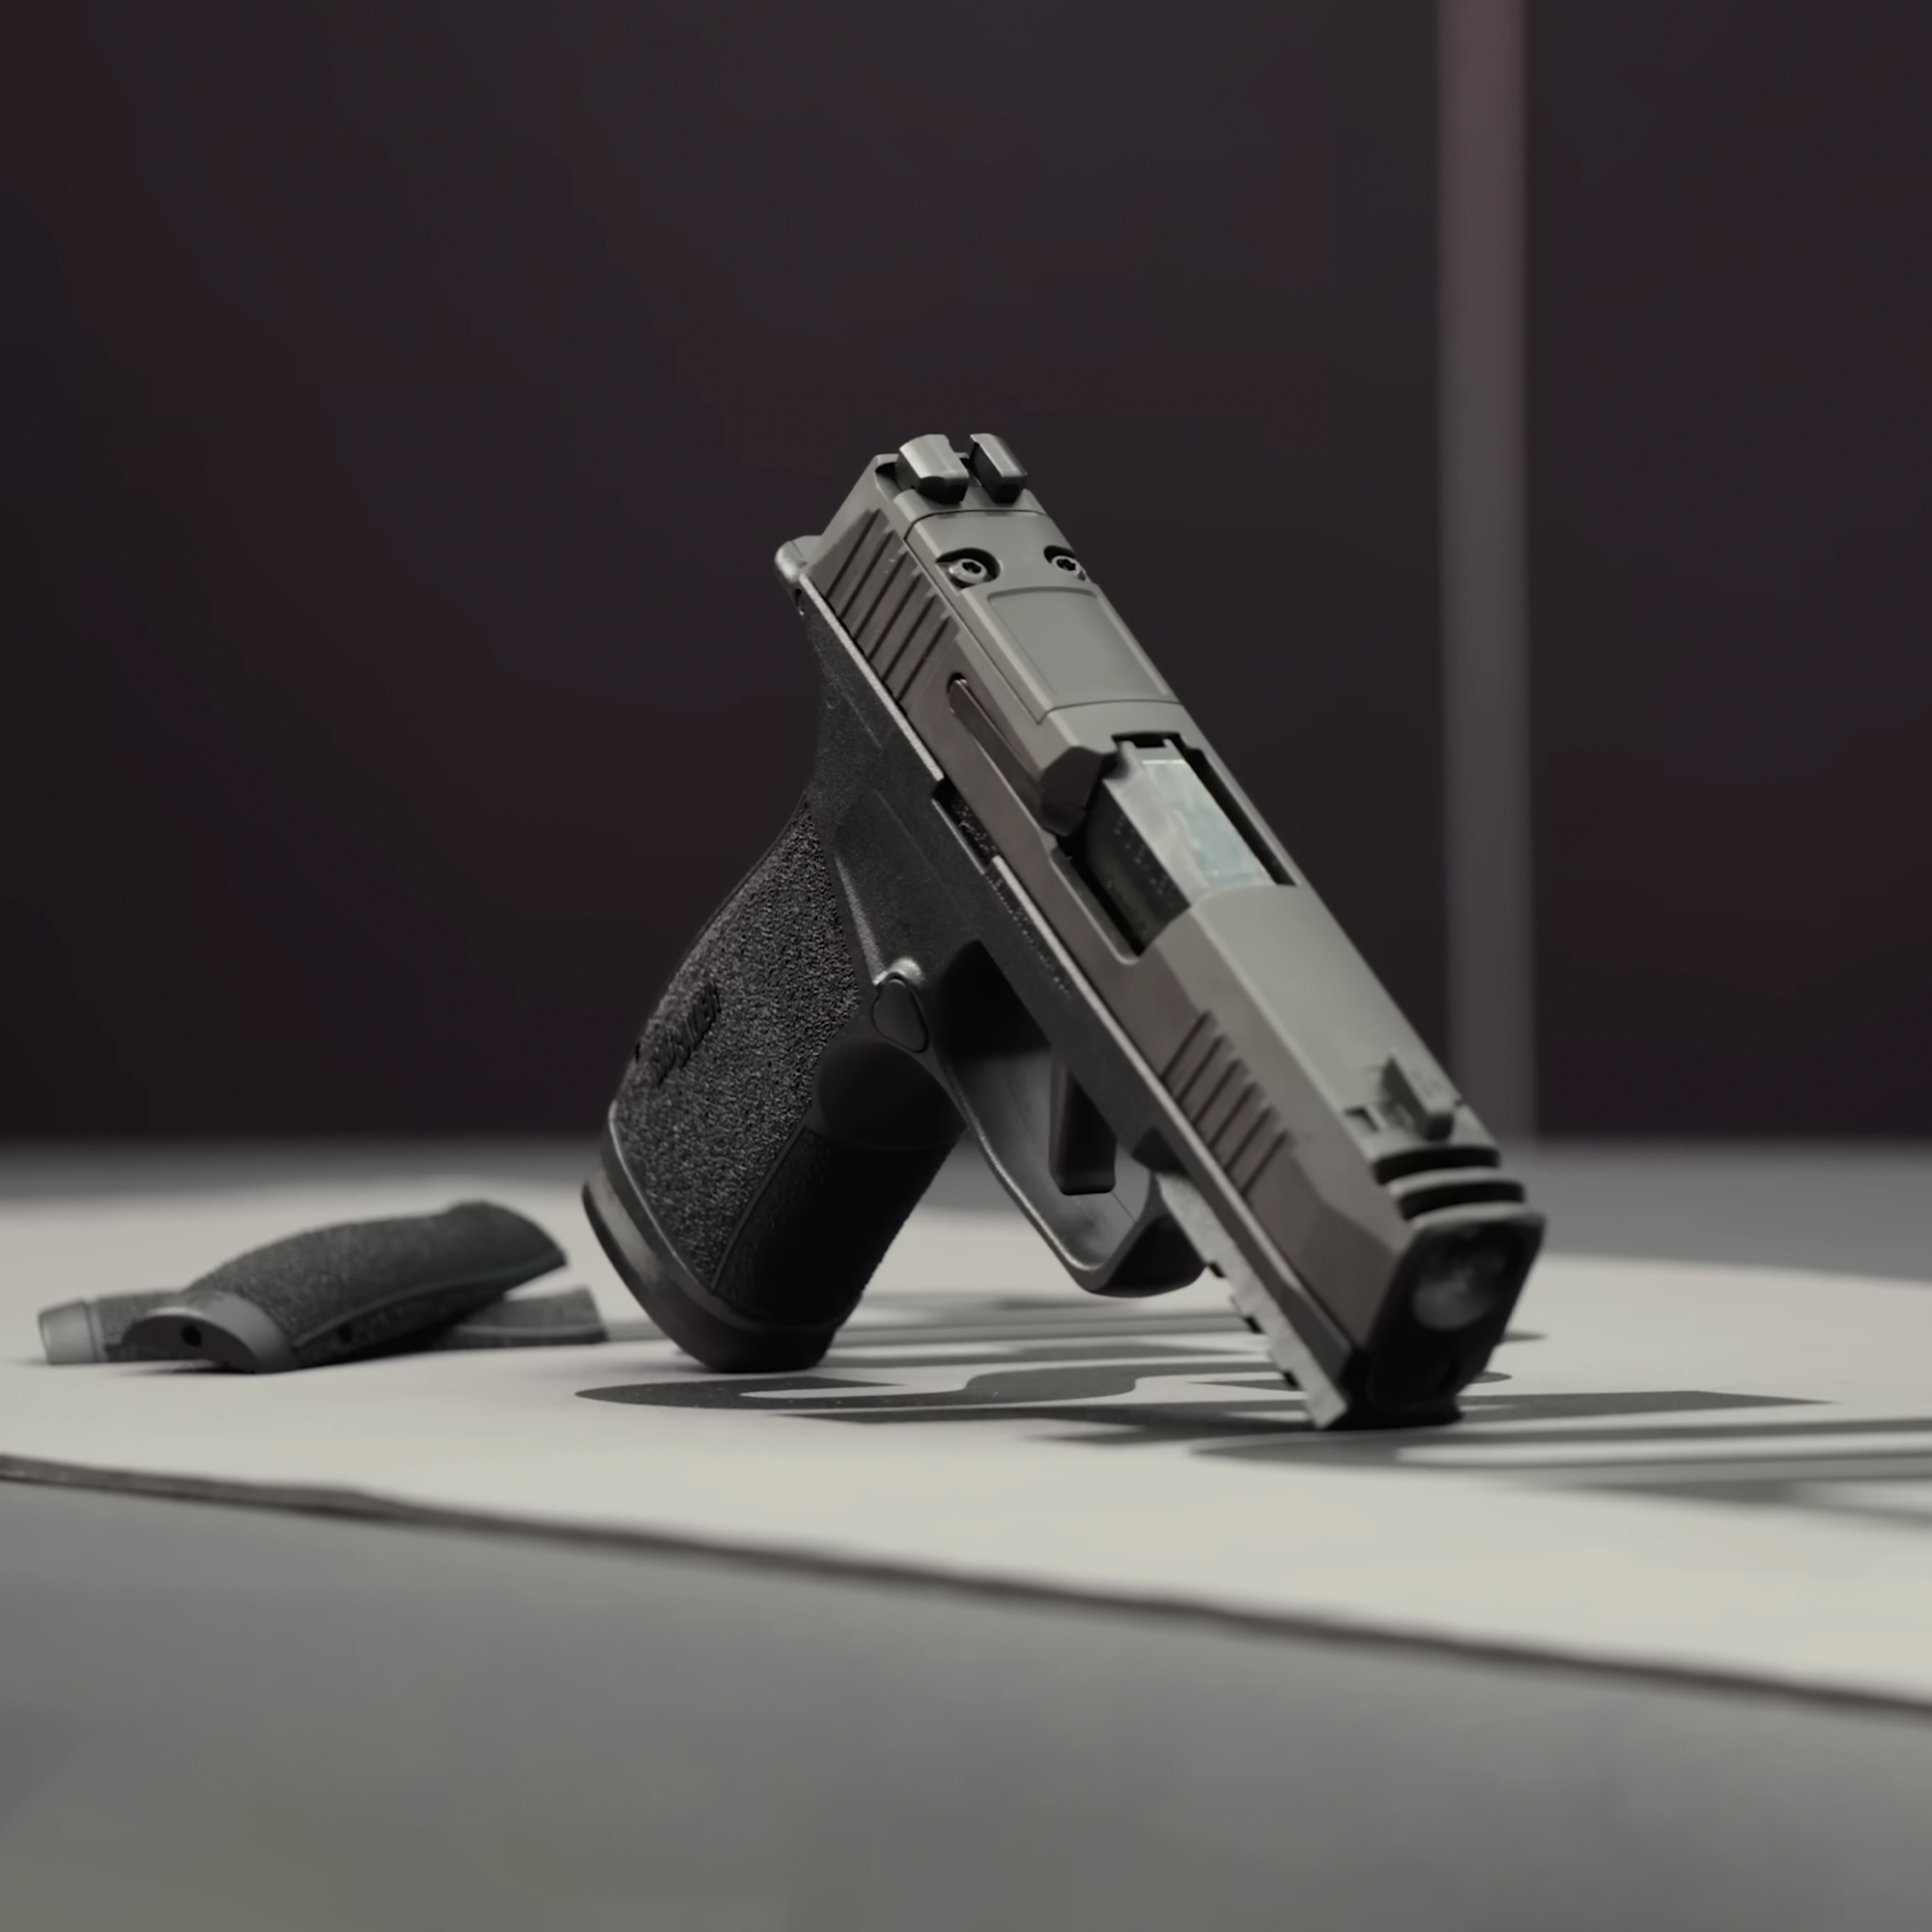 X-Macro Handgun Close up Image